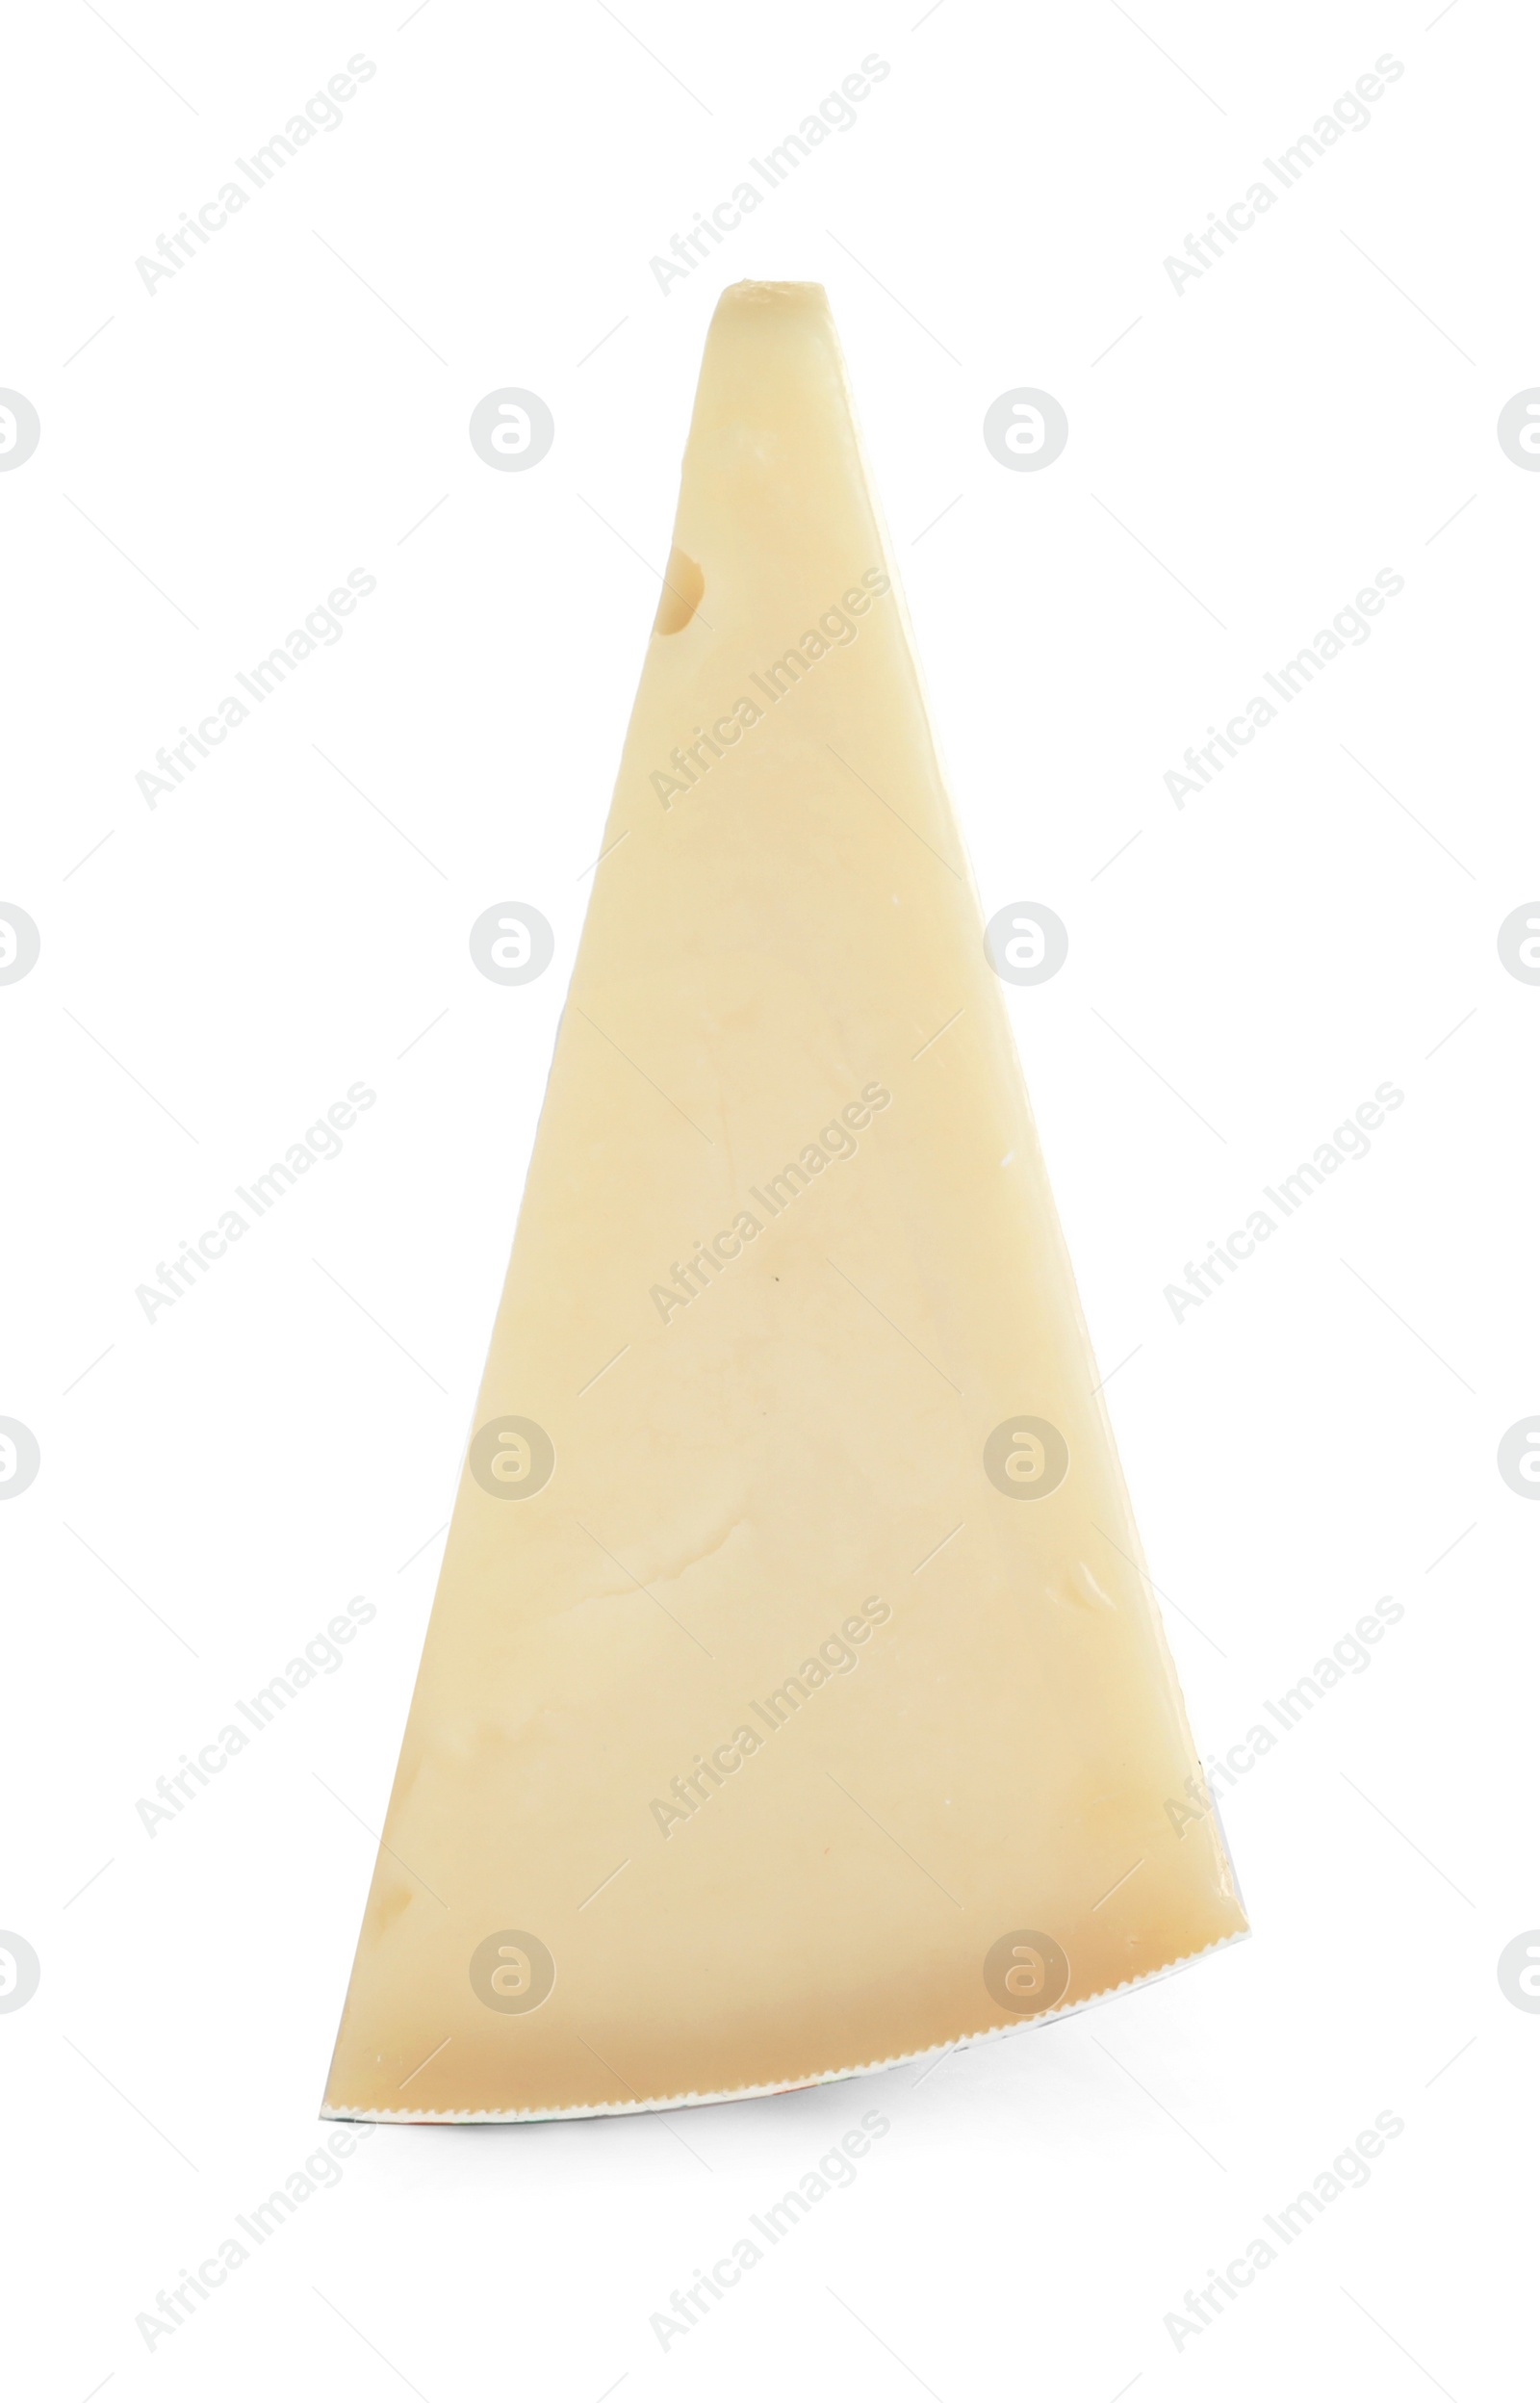 Photo of Piece of tasty grana padano cheese isolated on white